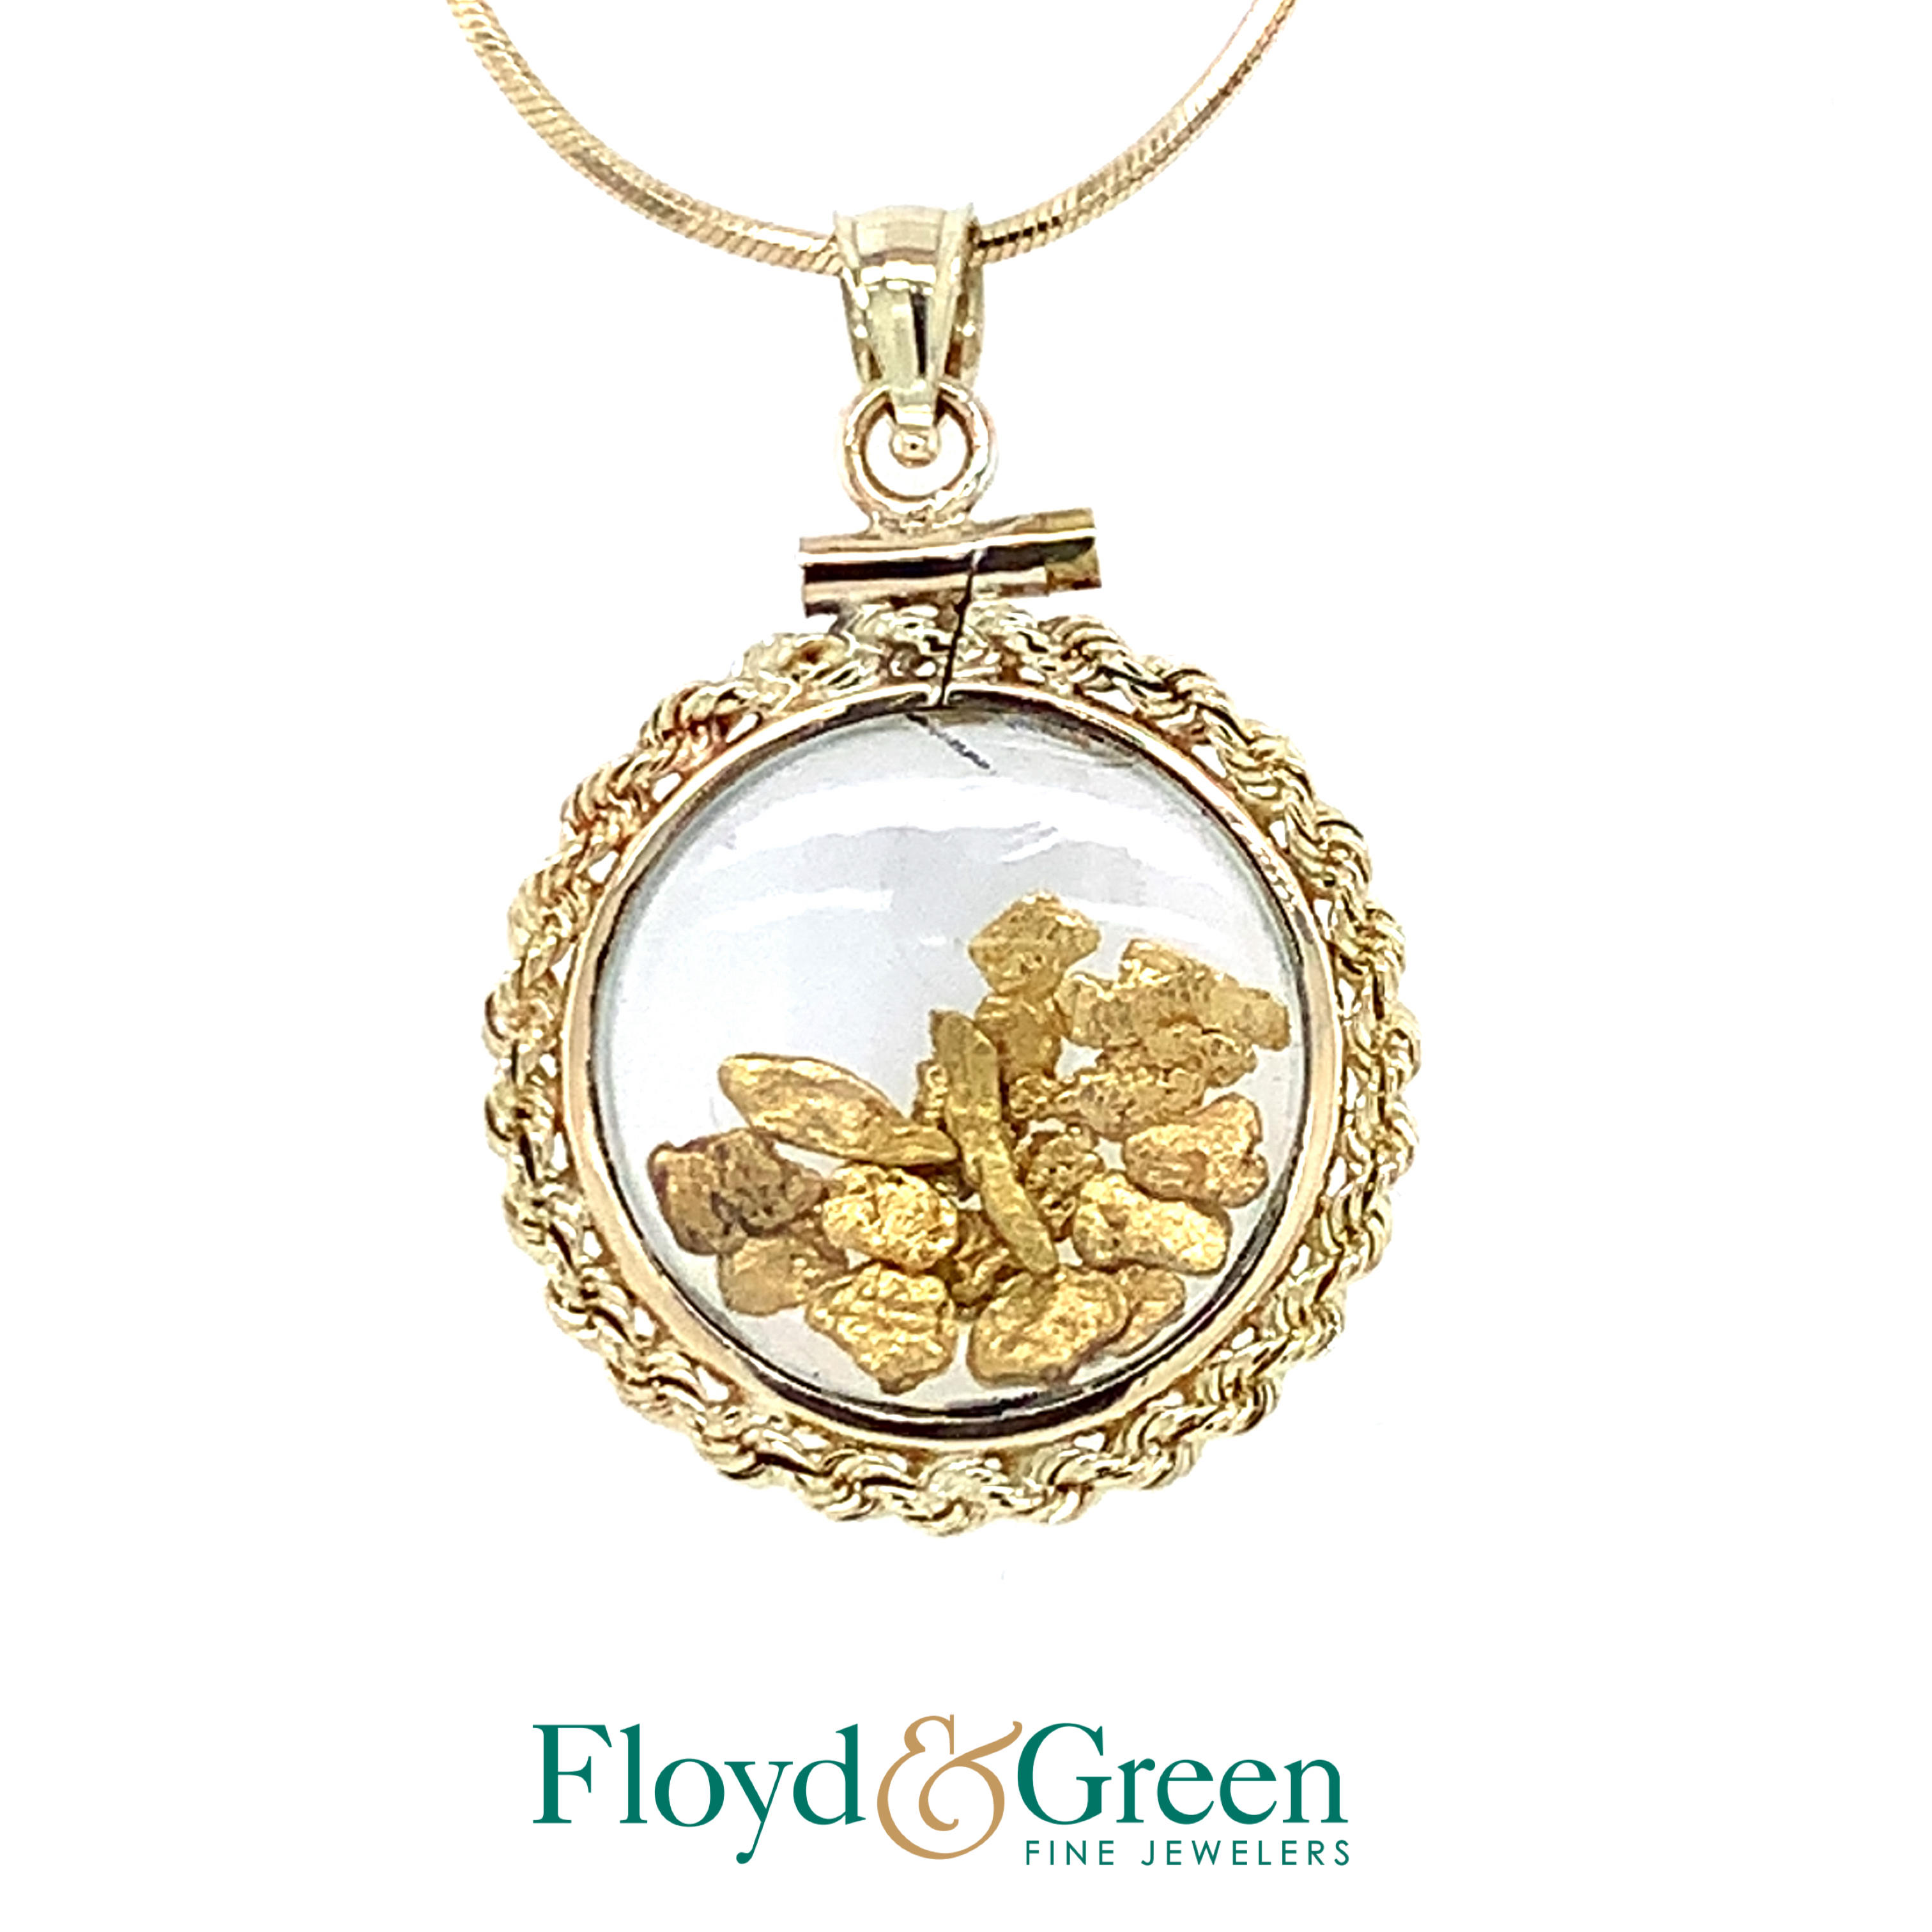 Clear Acryllic Floating Gold Flakes Pendant Necklace